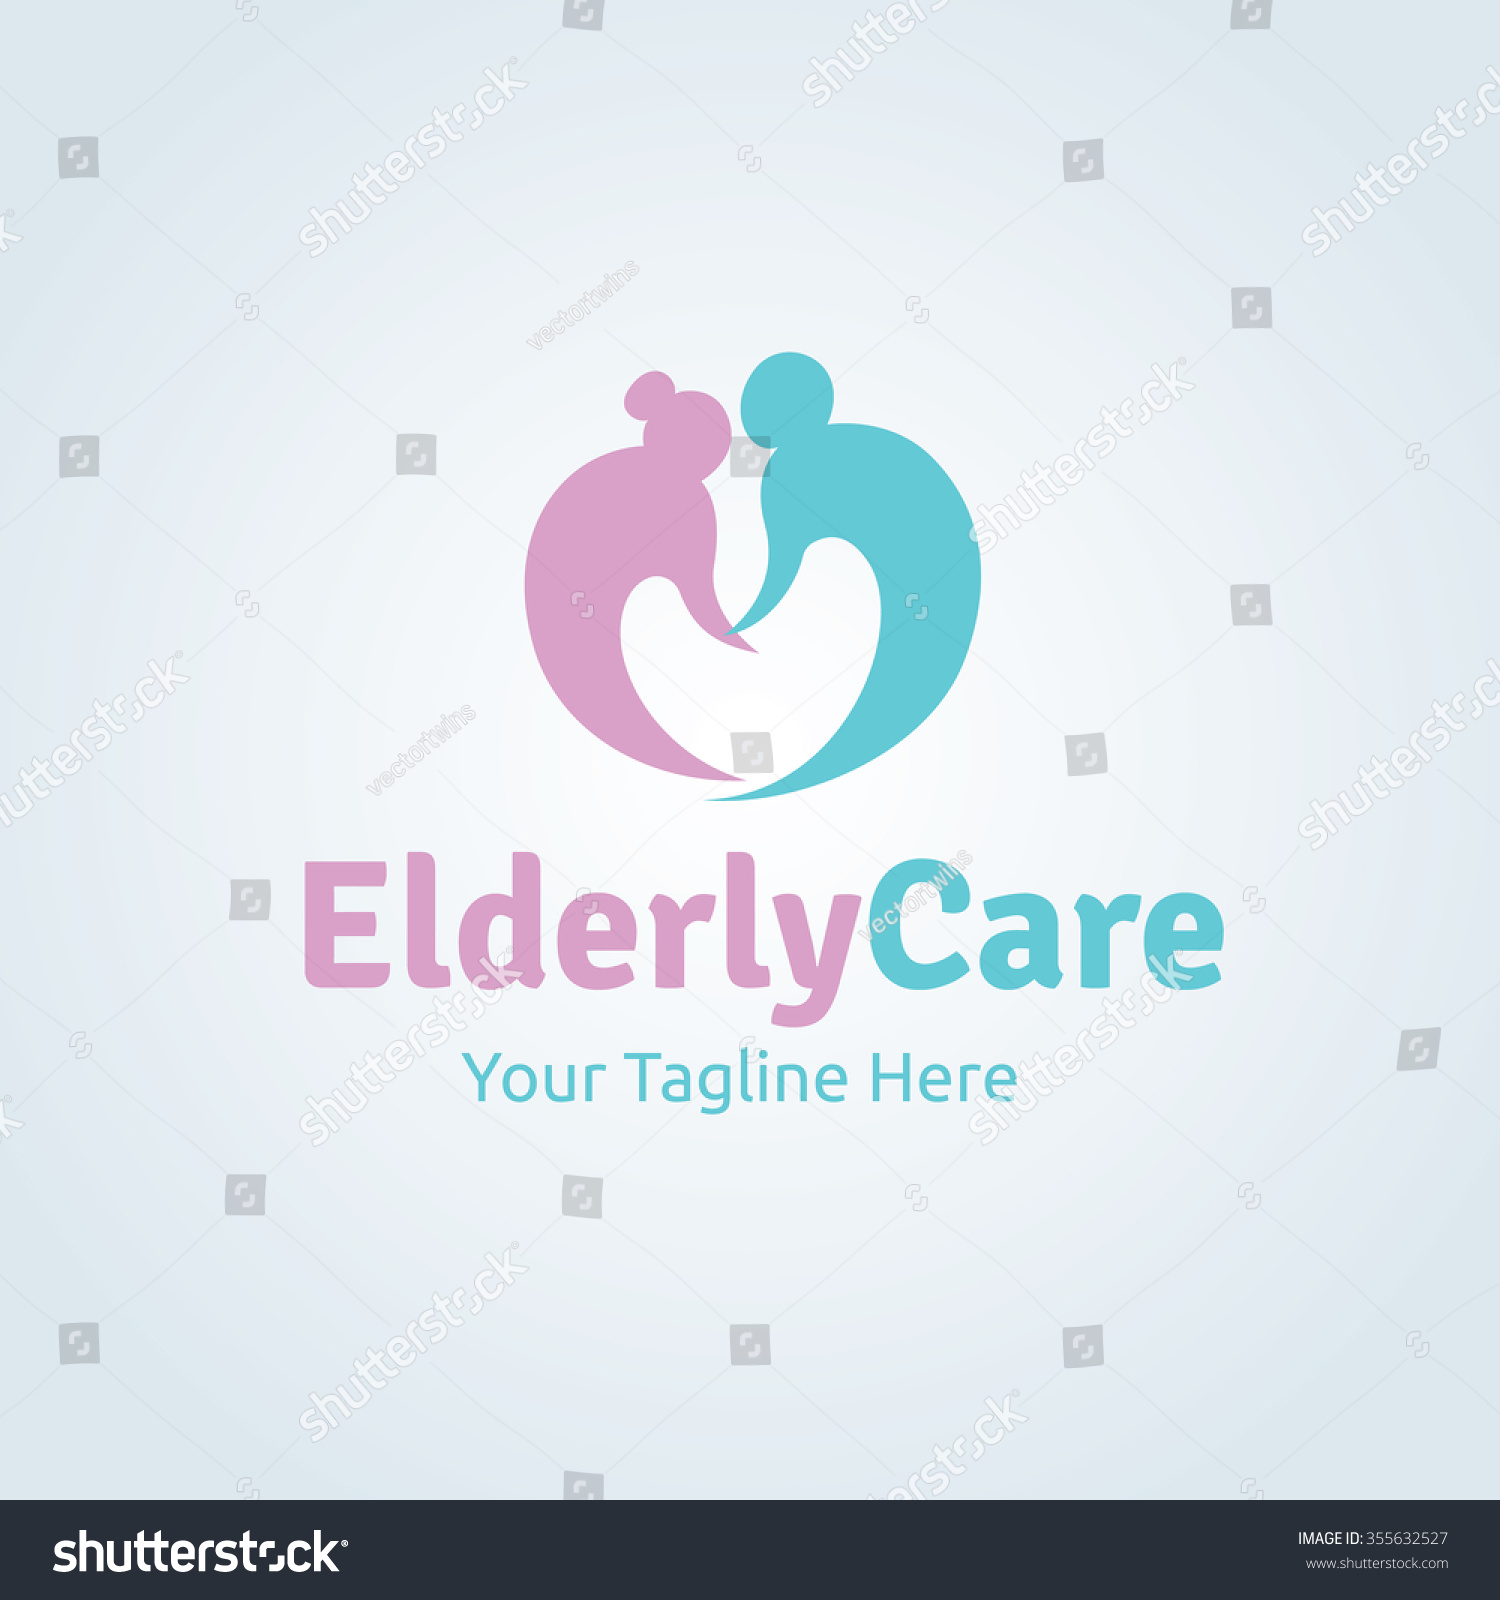 clipart elder care - photo #49